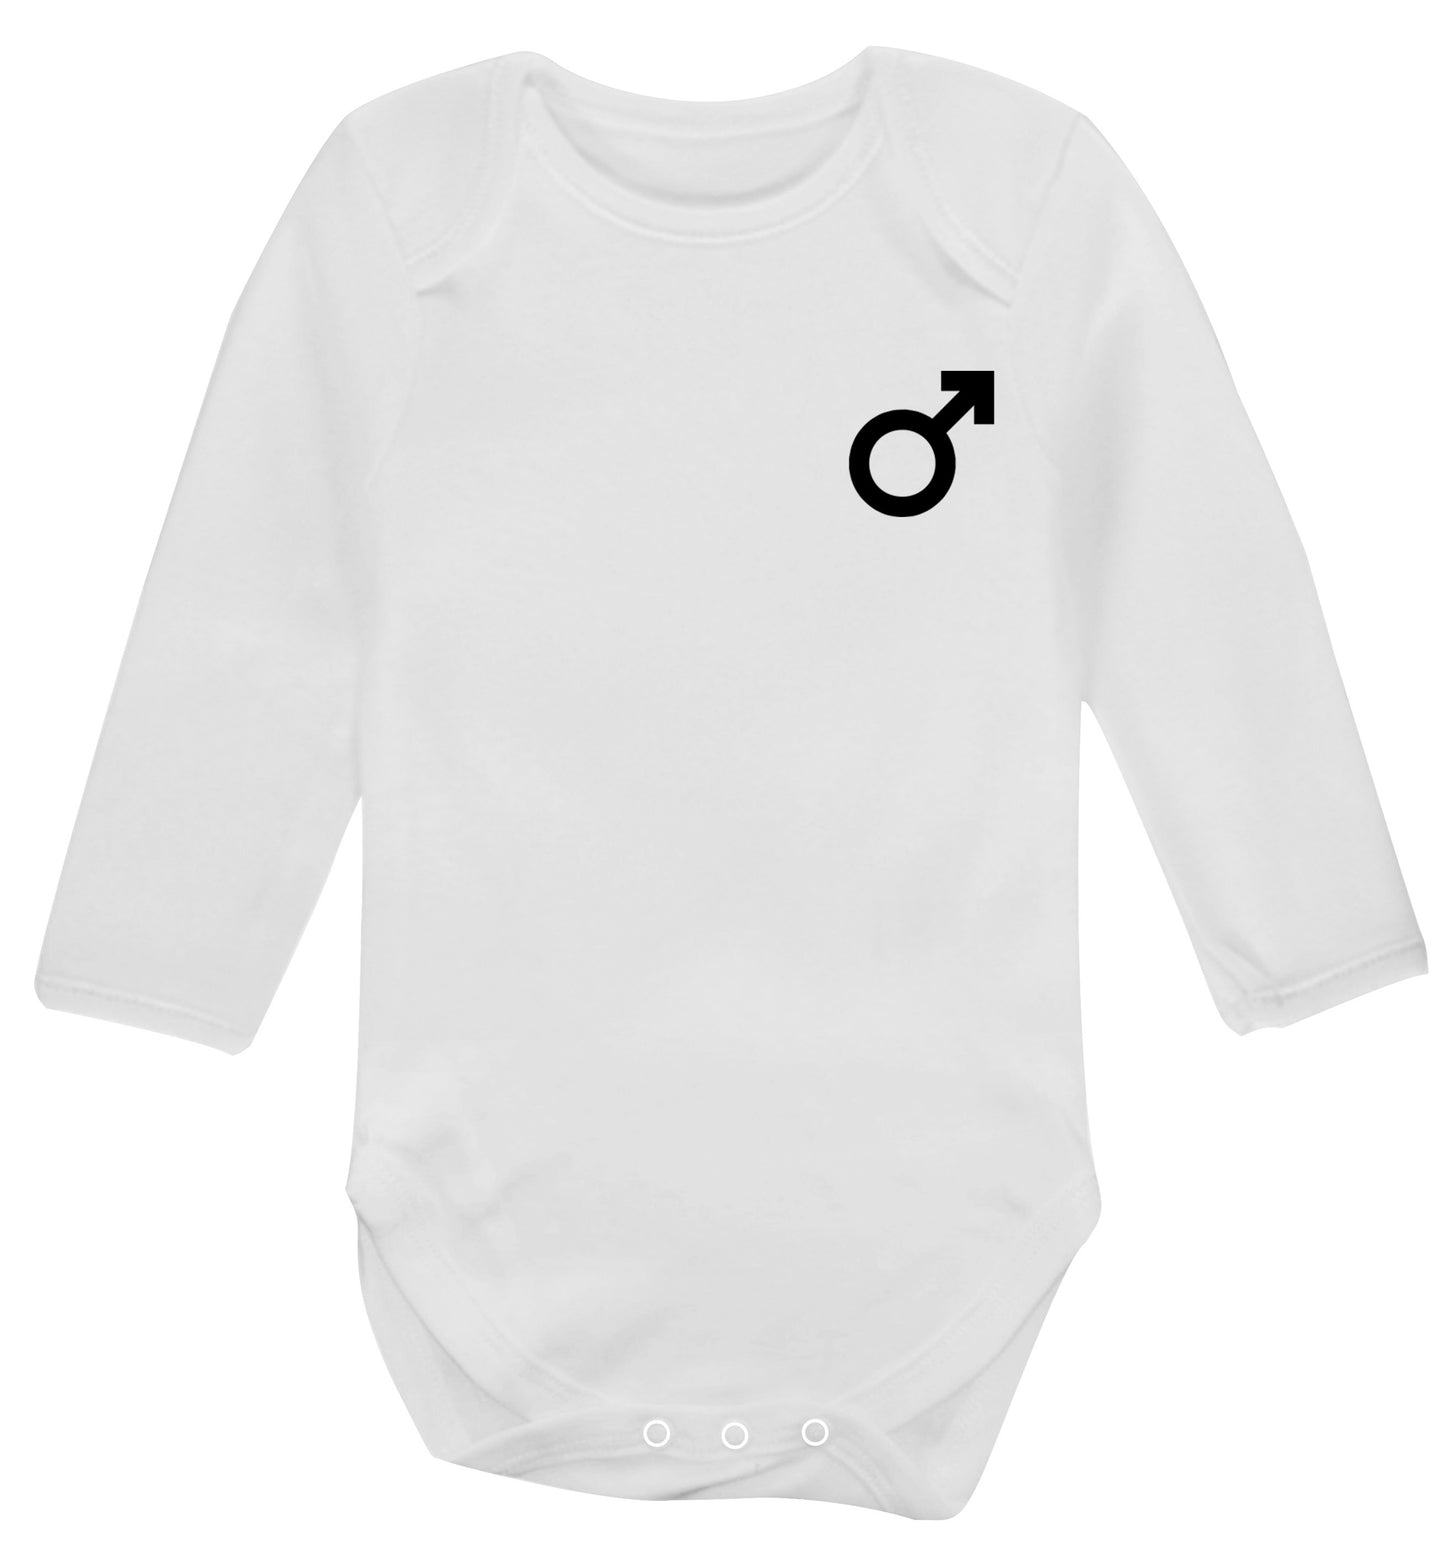 Male symbol pocket Baby Vest long sleeved white 6-12 months